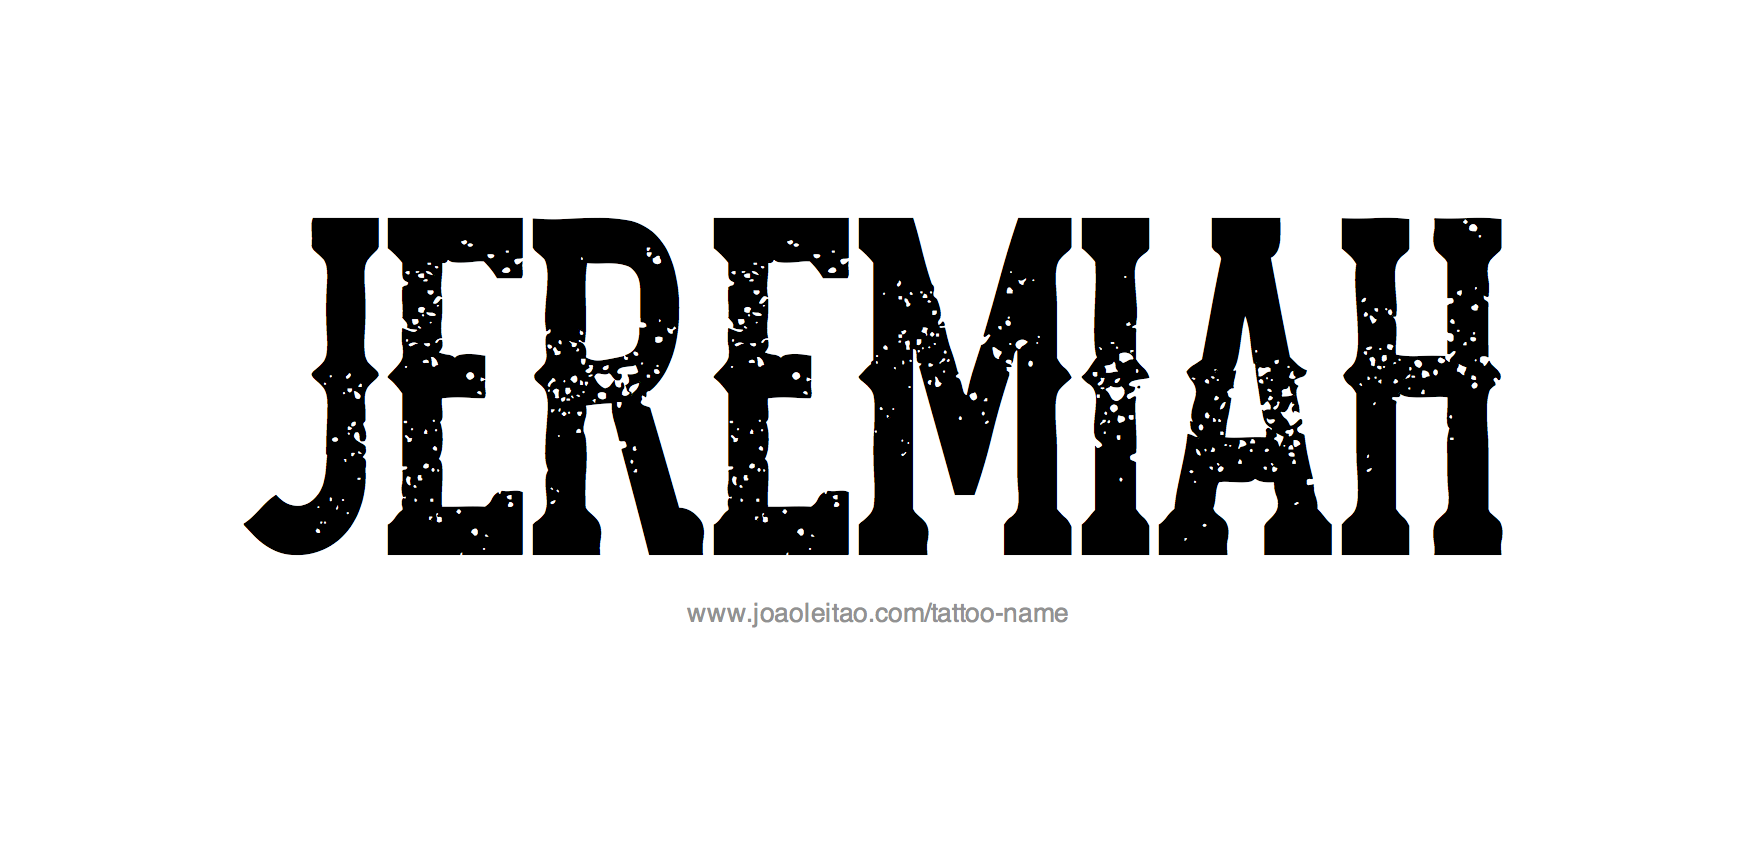 Tattoo Design Name Jeremiah